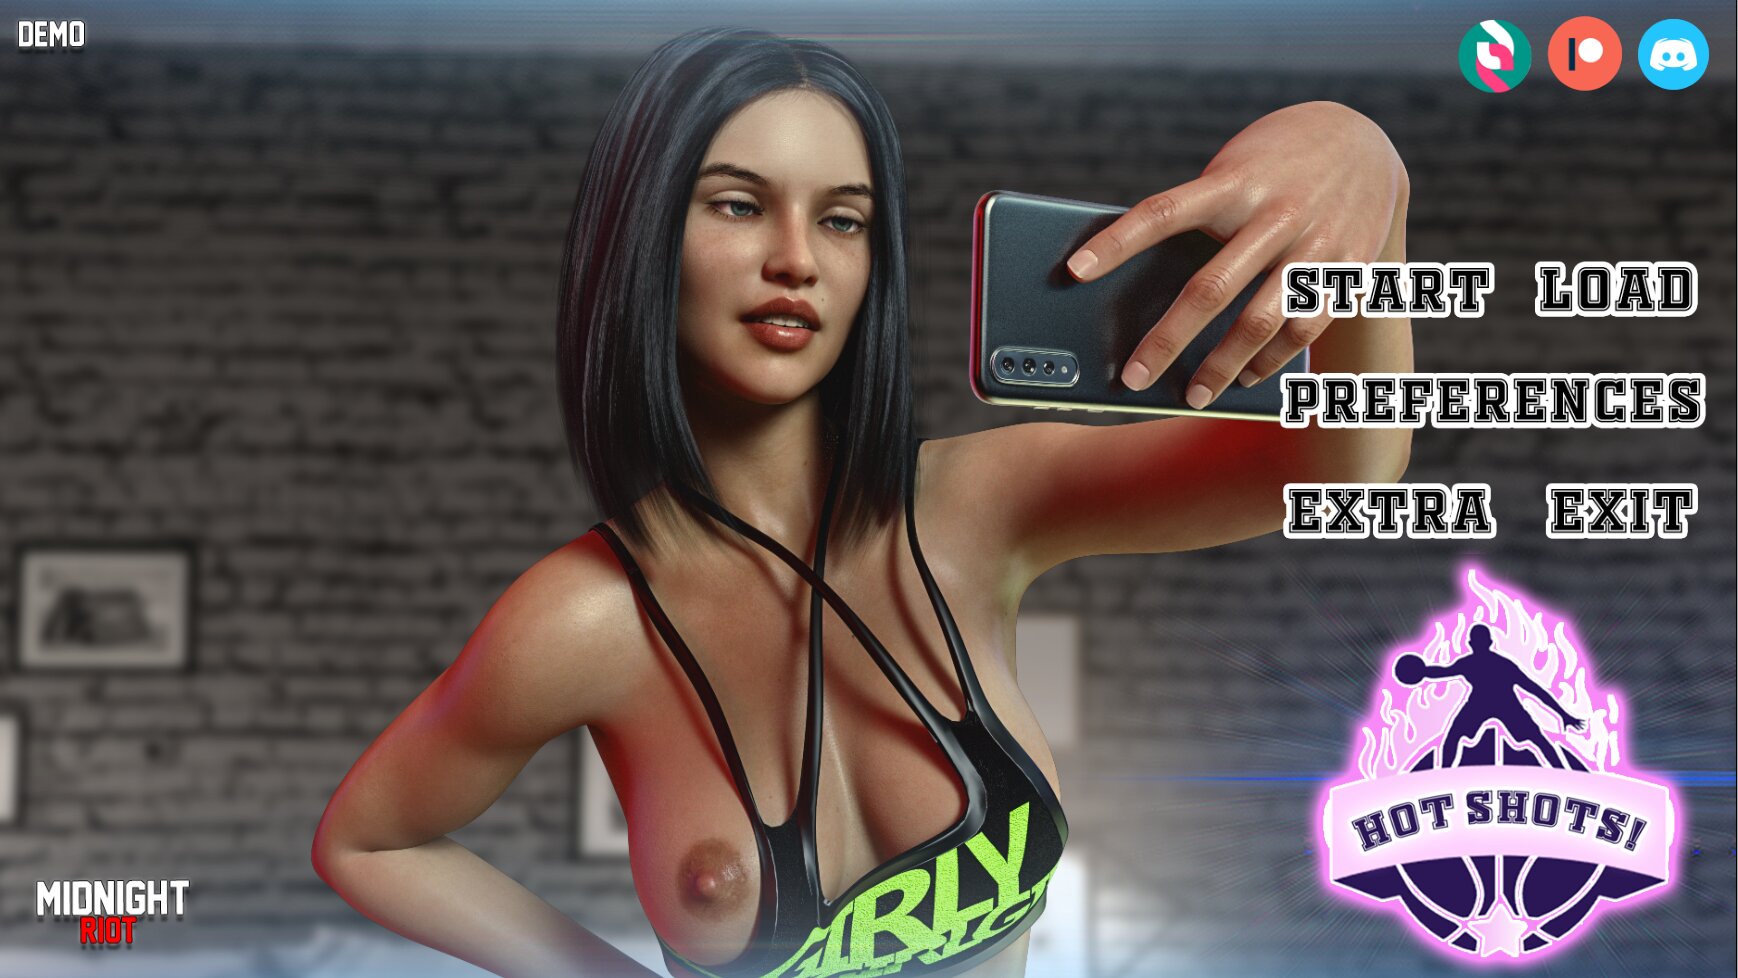 Adultgamesworld Free Porn Games and Sex Games » Hot Shots! photo